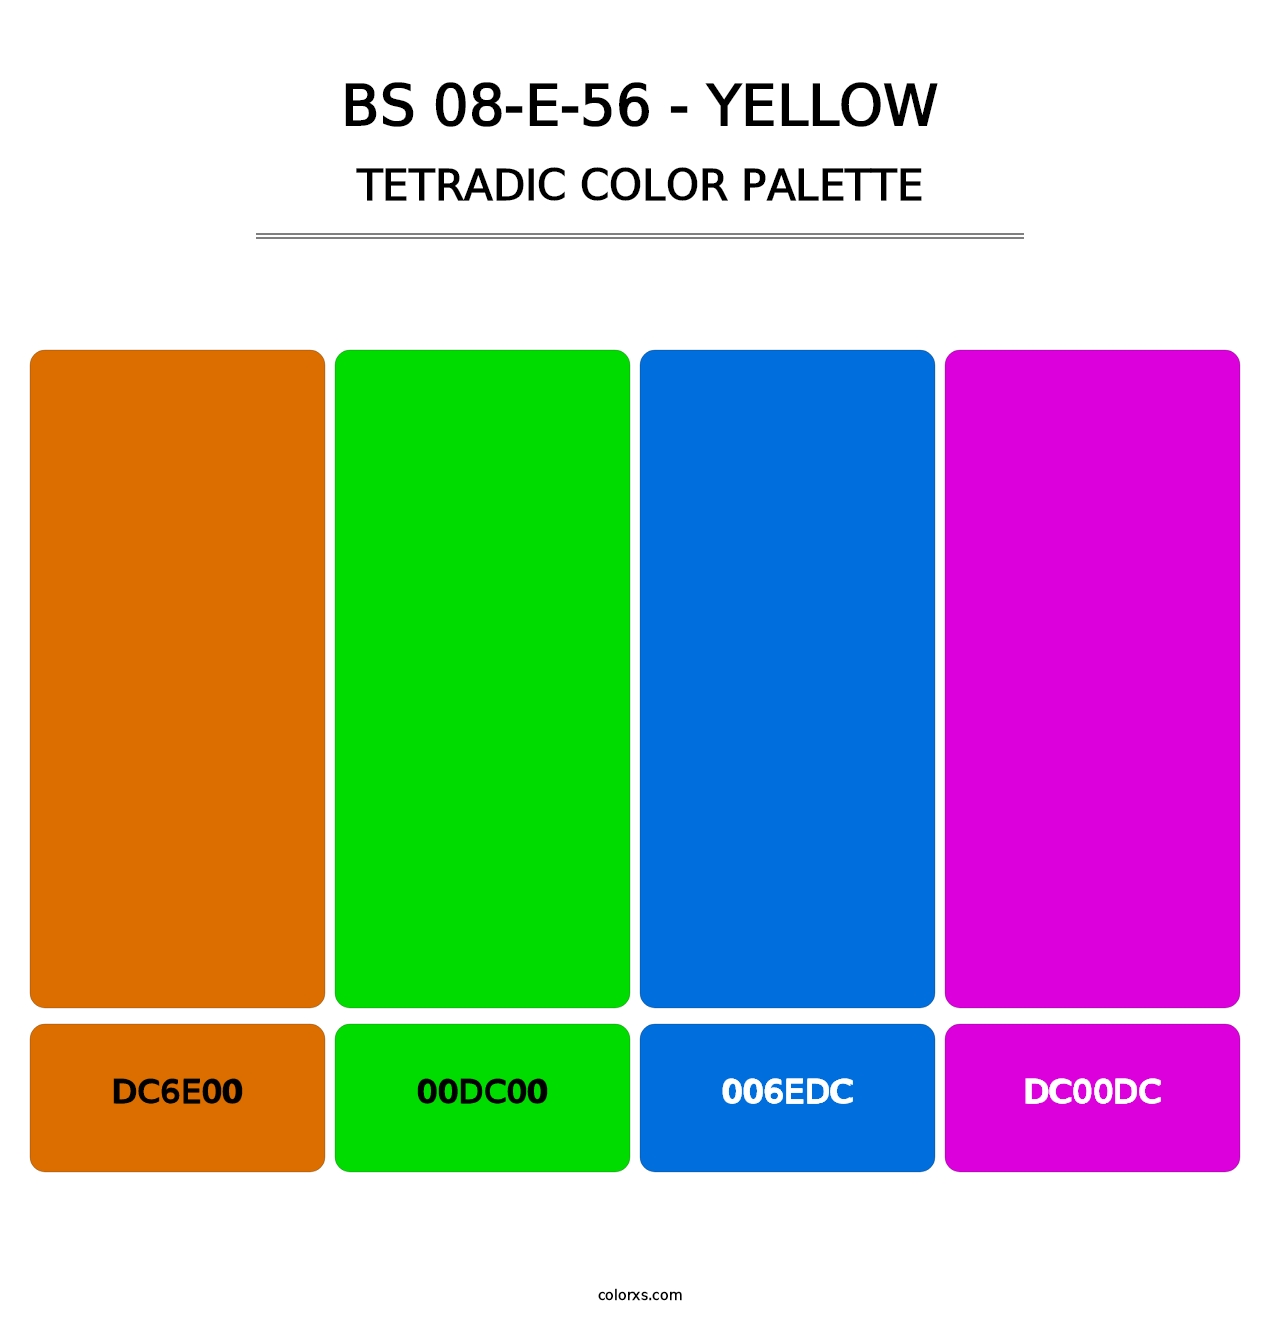 BS 08-E-56 - Yellow - Tetradic Color Palette